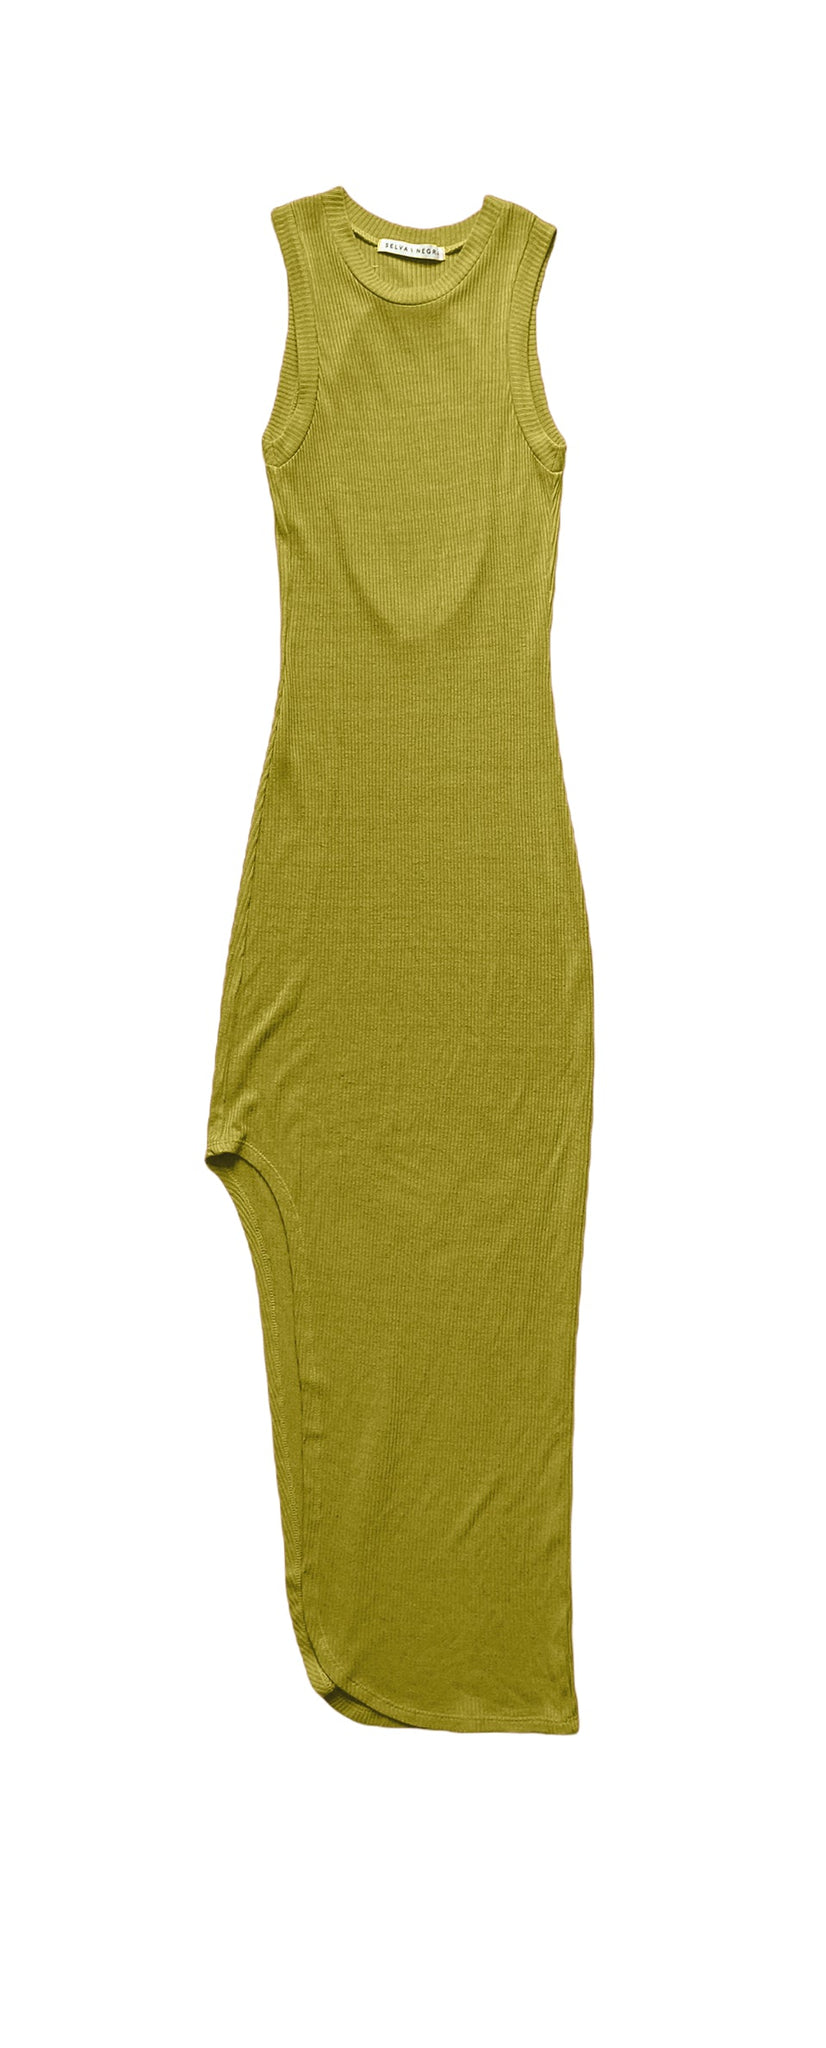 bella dress in matcha viscose rib- Size Small SAMPLE